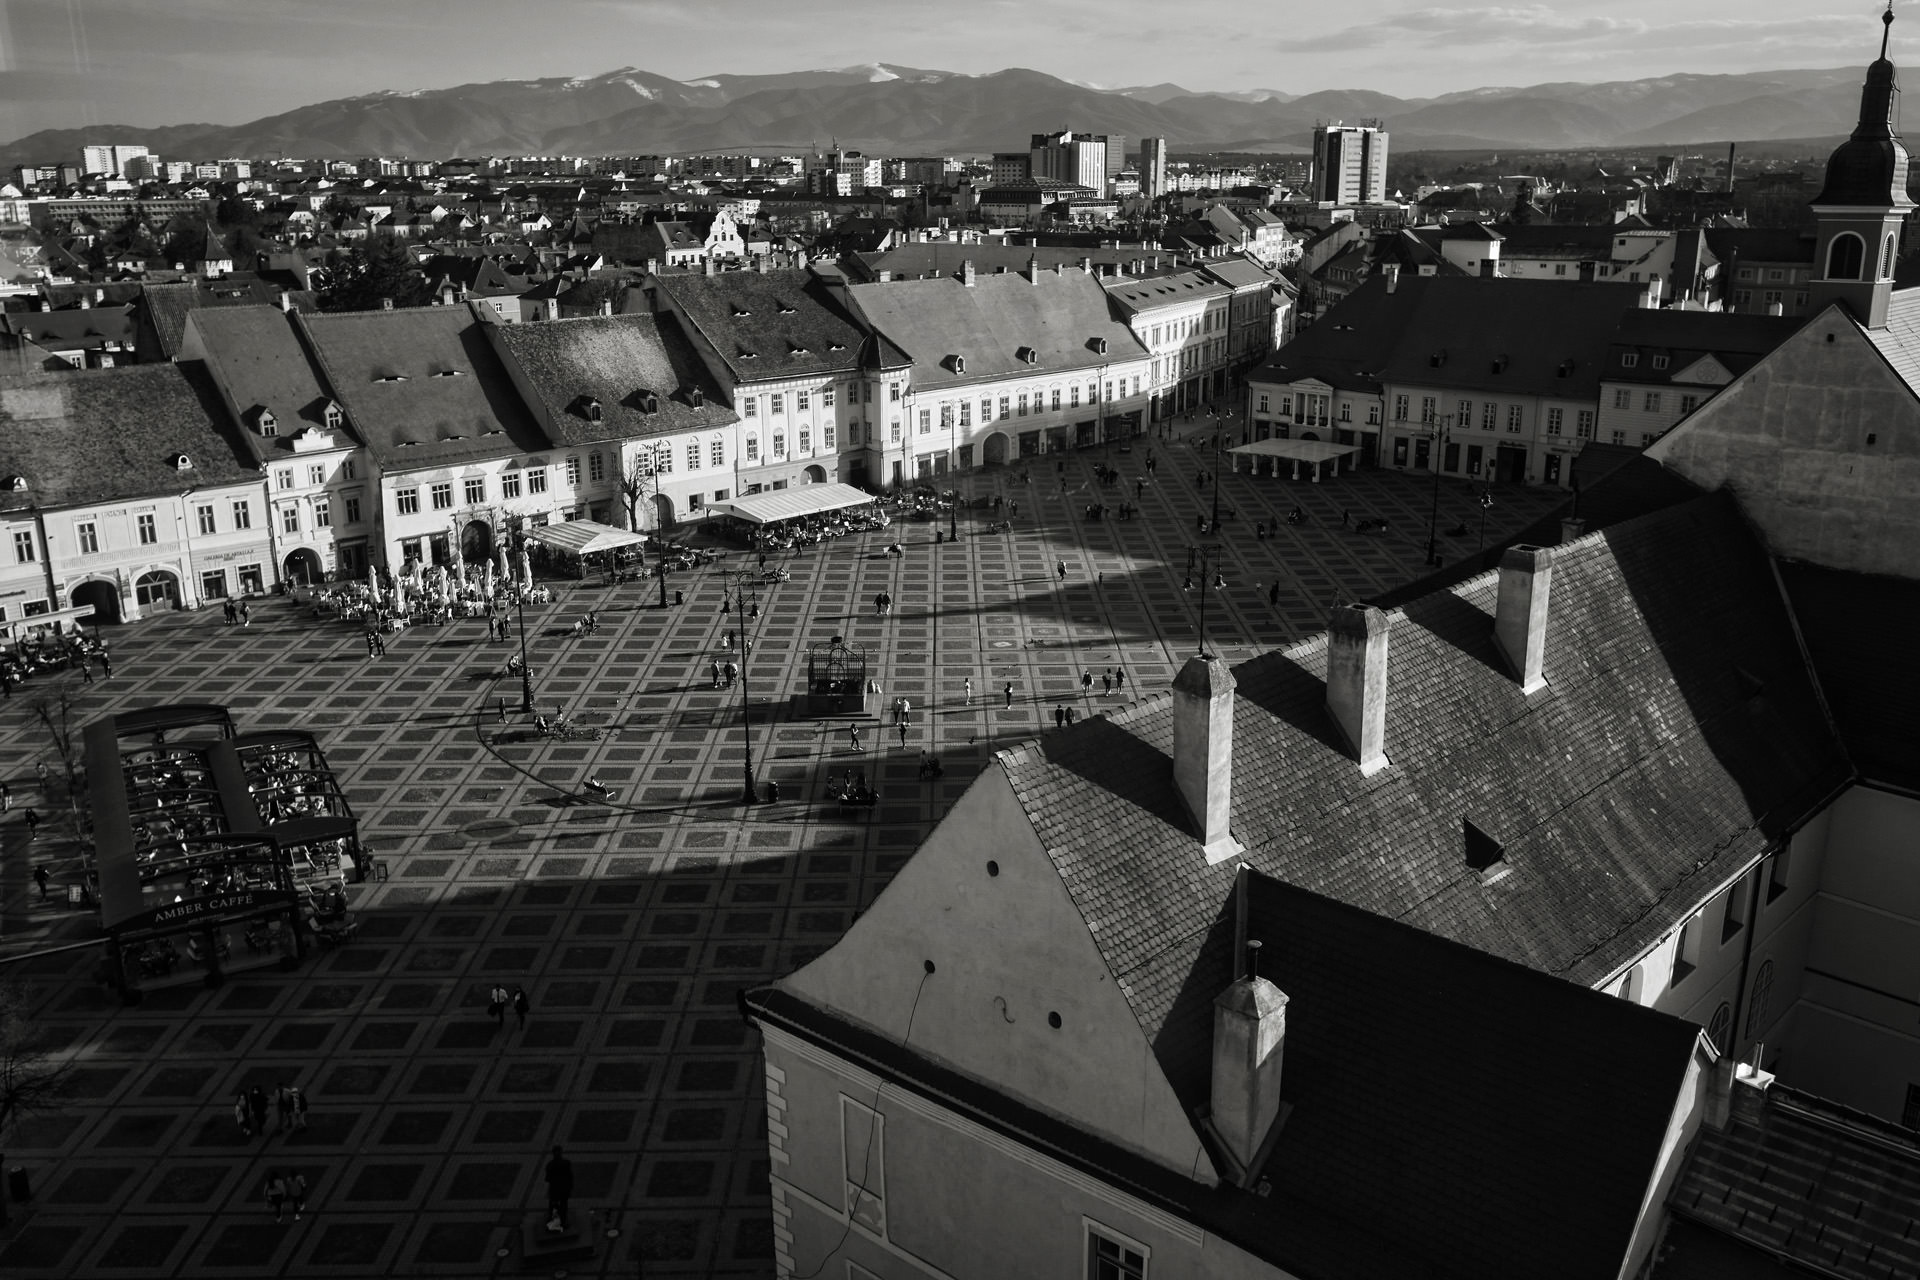 Grand Square of Sibiu